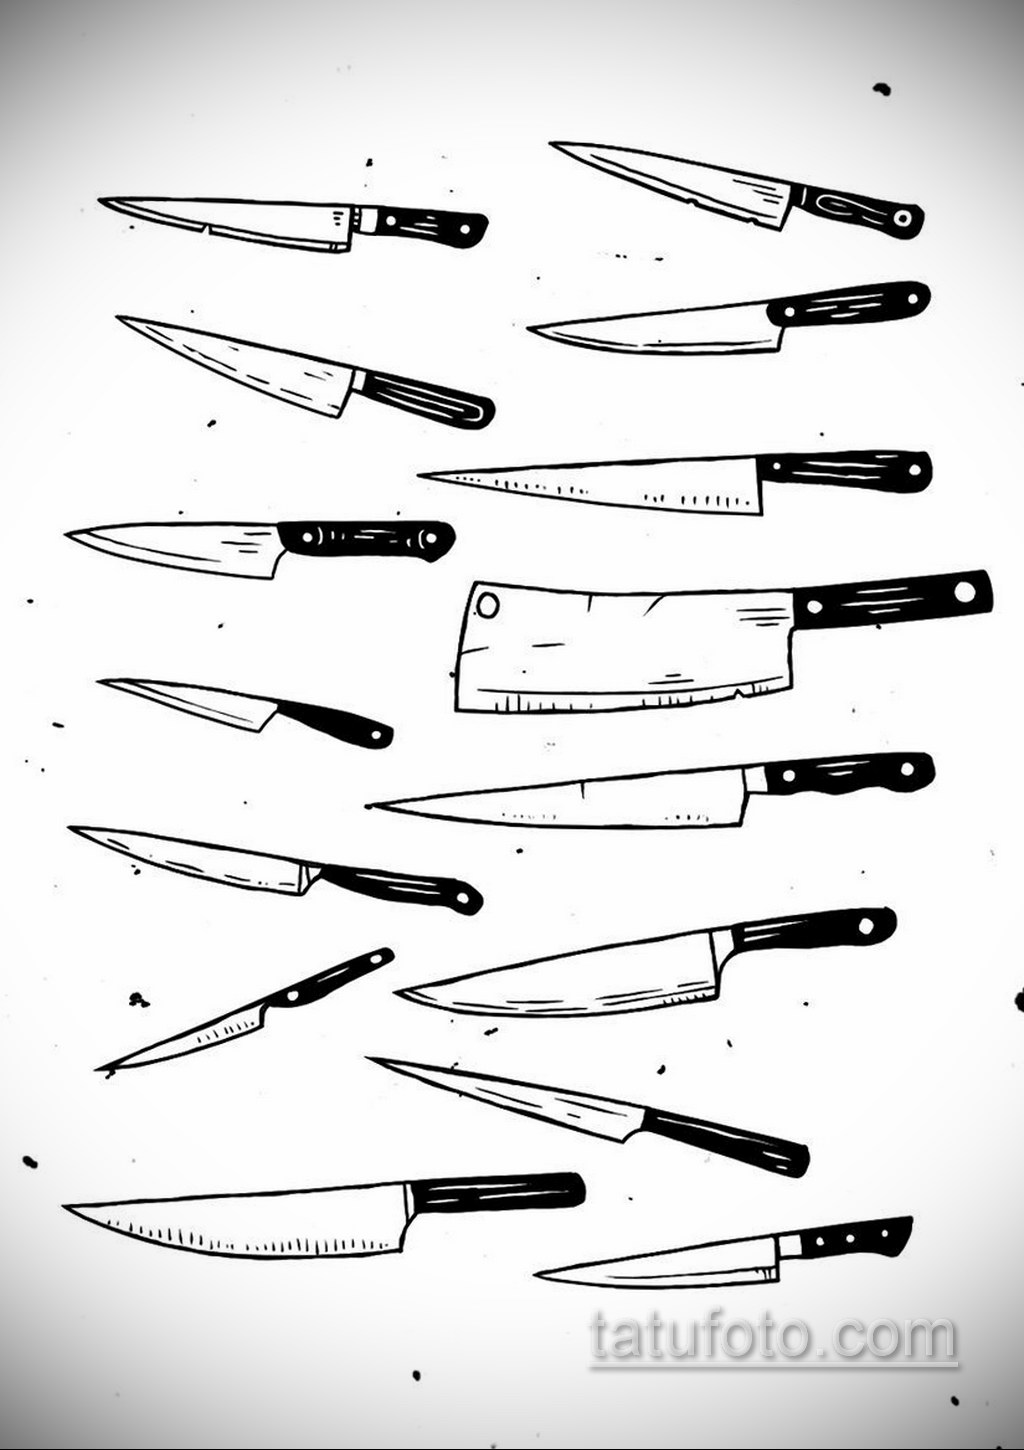 Нож поэтапно. Нож вид спереди референс. Эскизы ножей. Нож для рисования. Нарисовать нож.